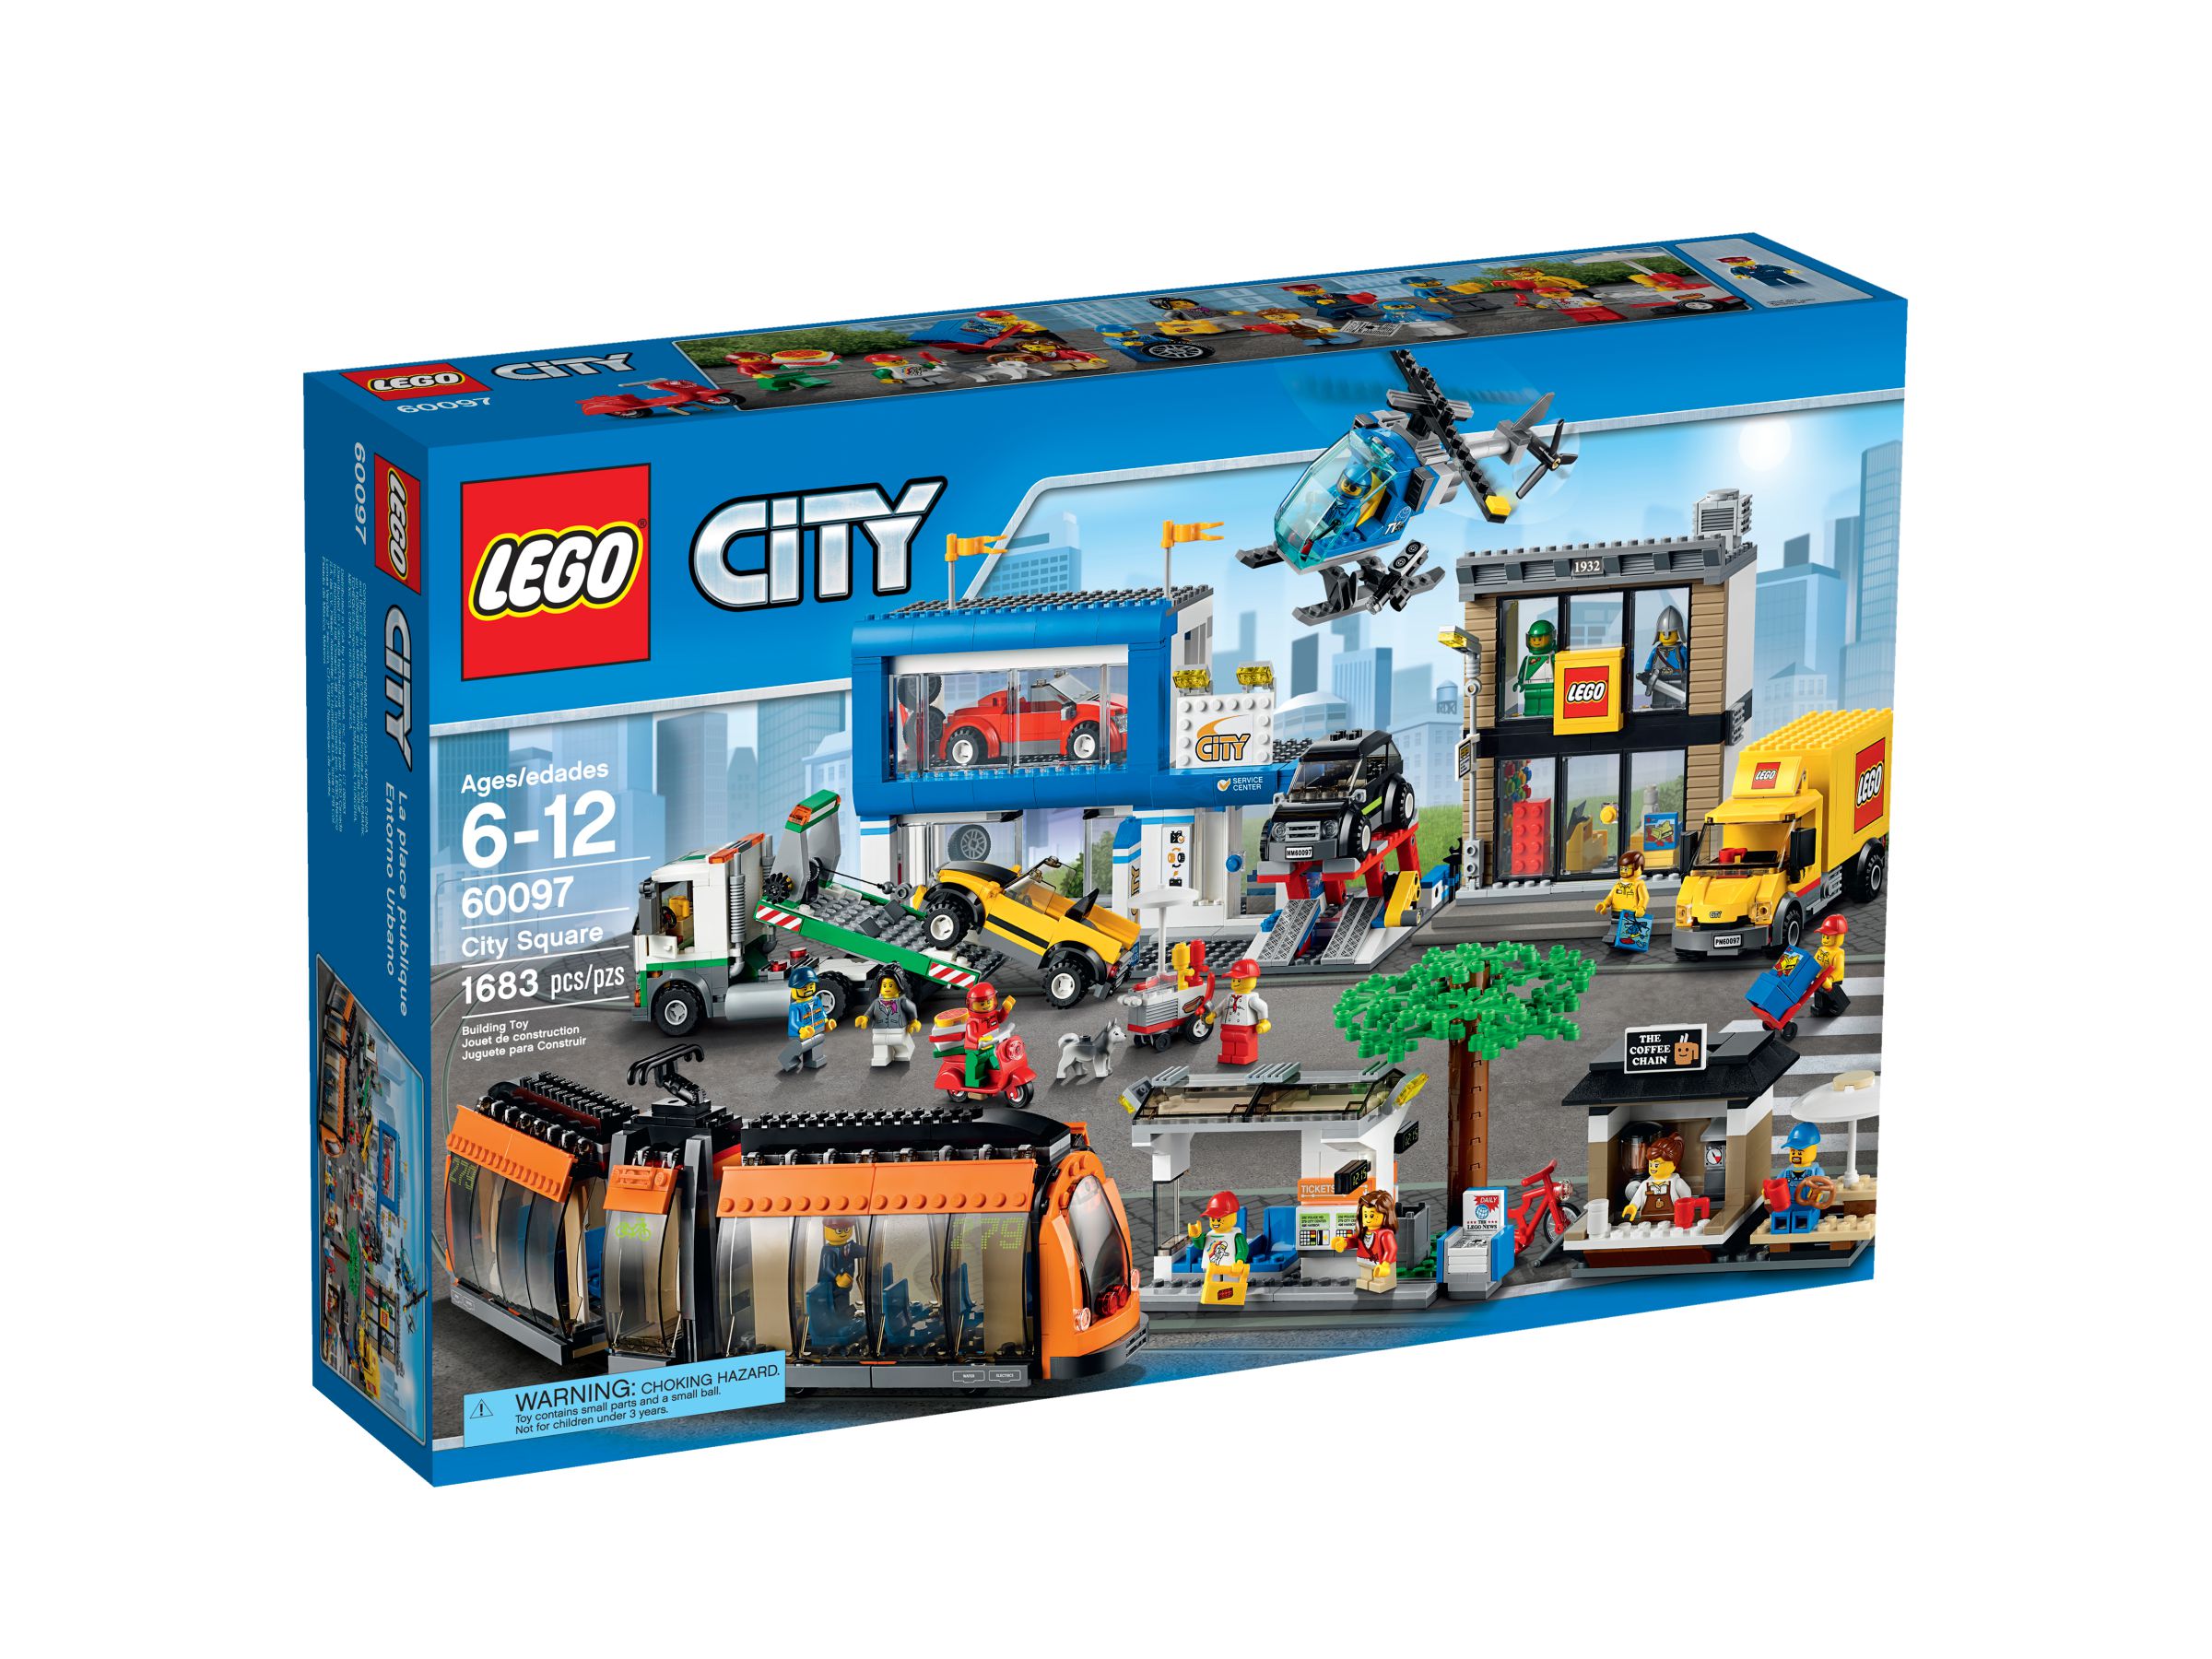 LEGO City 60097 Stadtzentrum LEGO_60097_alt1.jpg